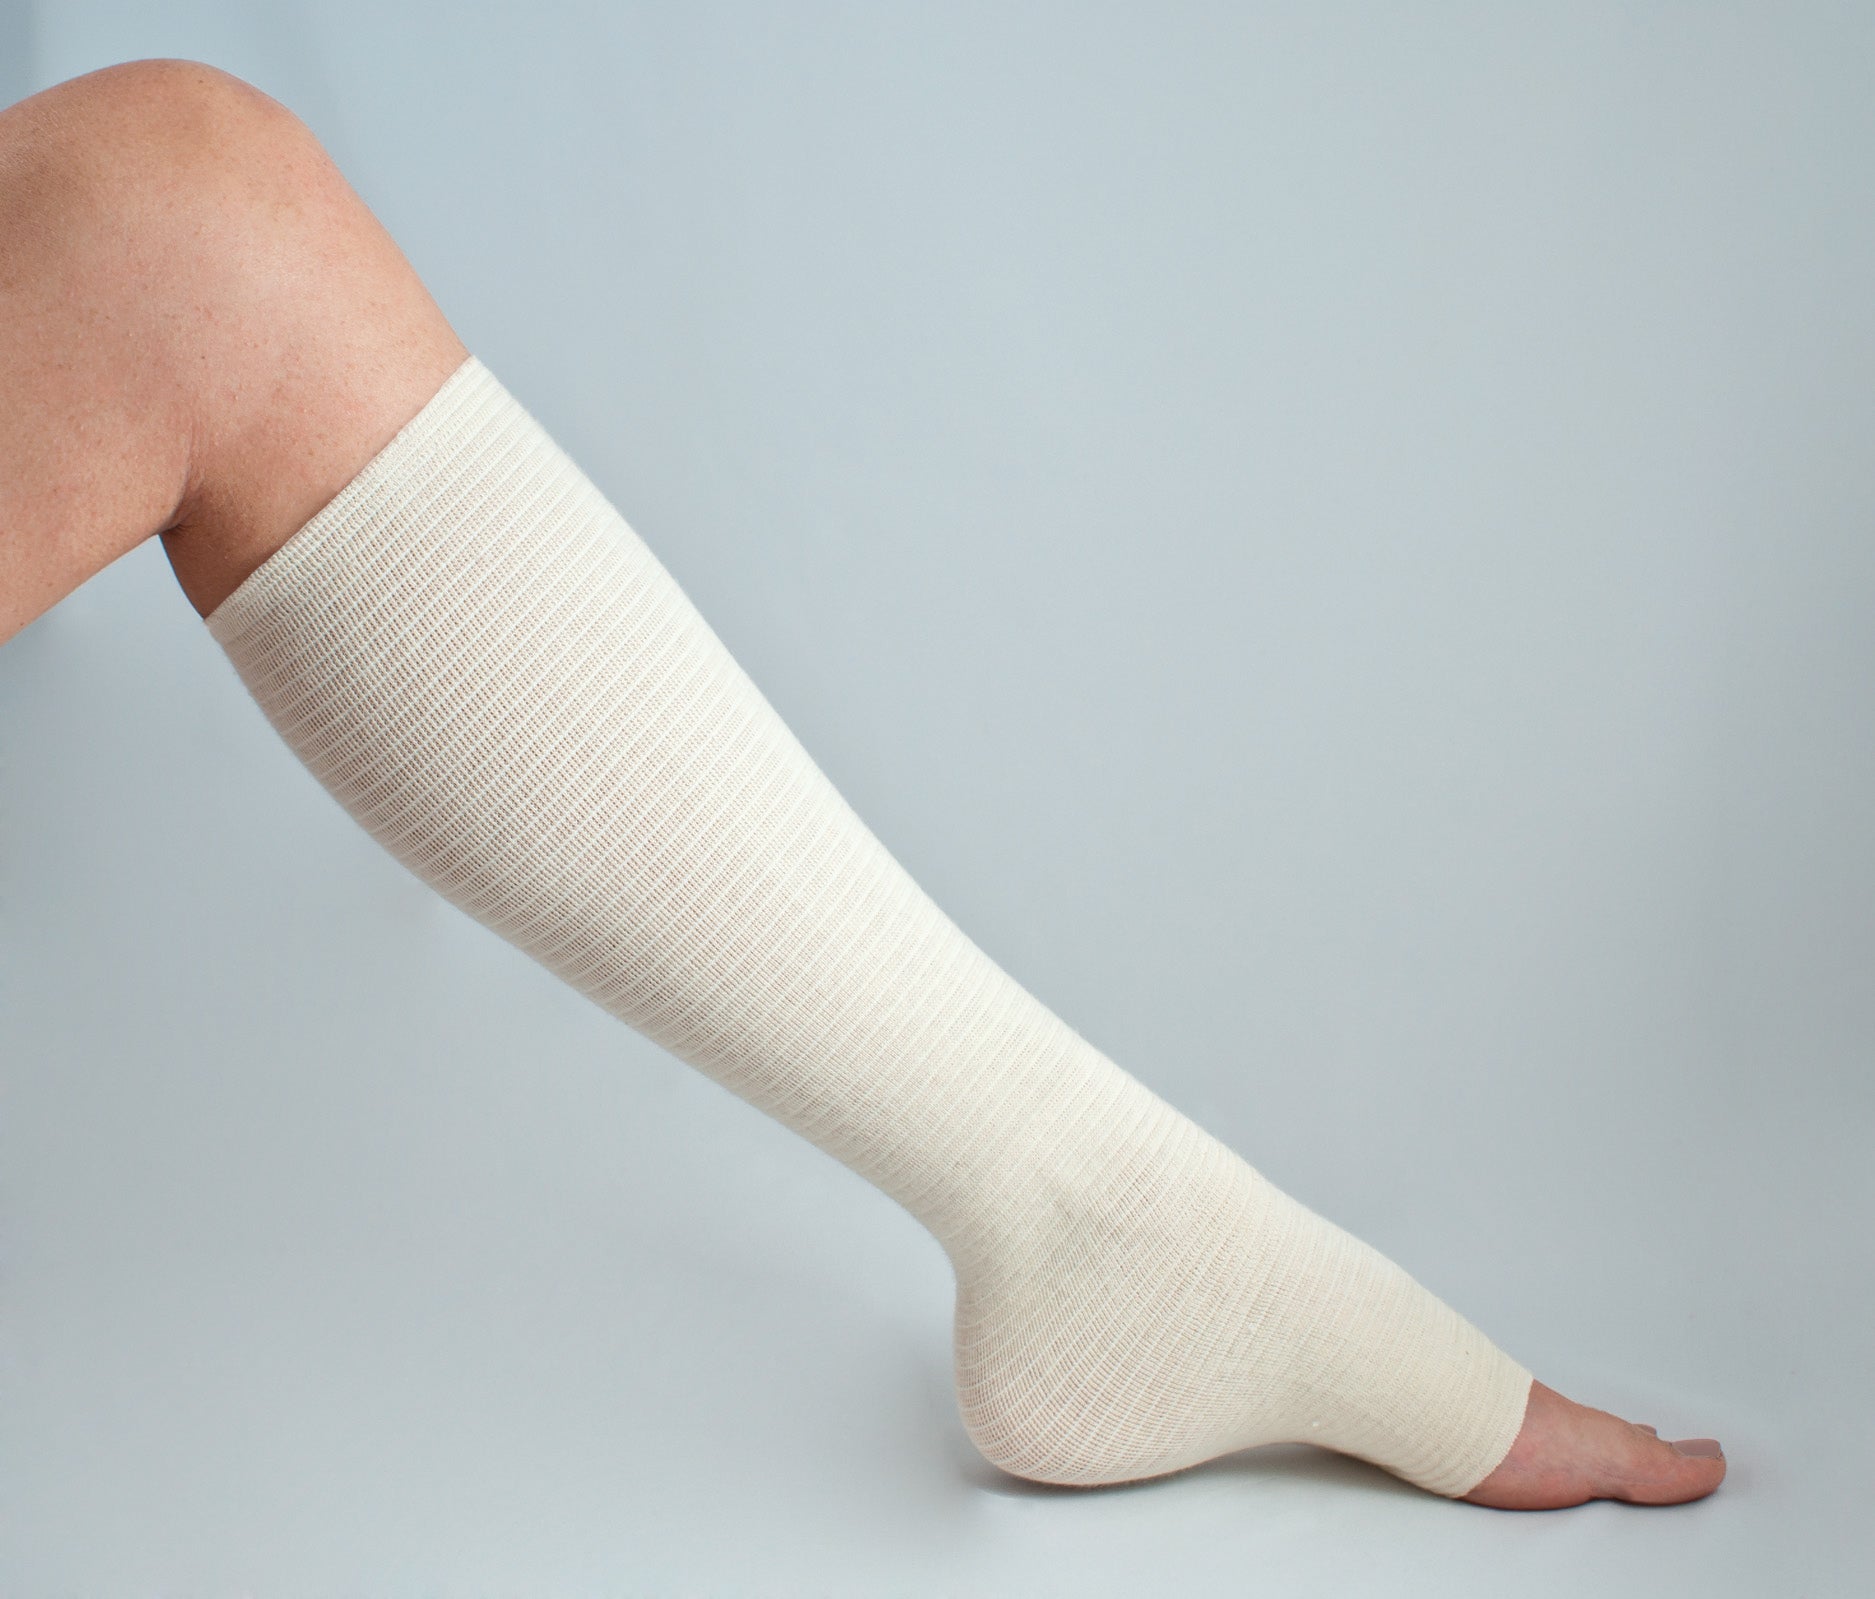 EA/1 - tg shape Tubular Bandage, Large Below Knee, 15" - 16-1/2" Circumference - Best Buy Medical Supplies